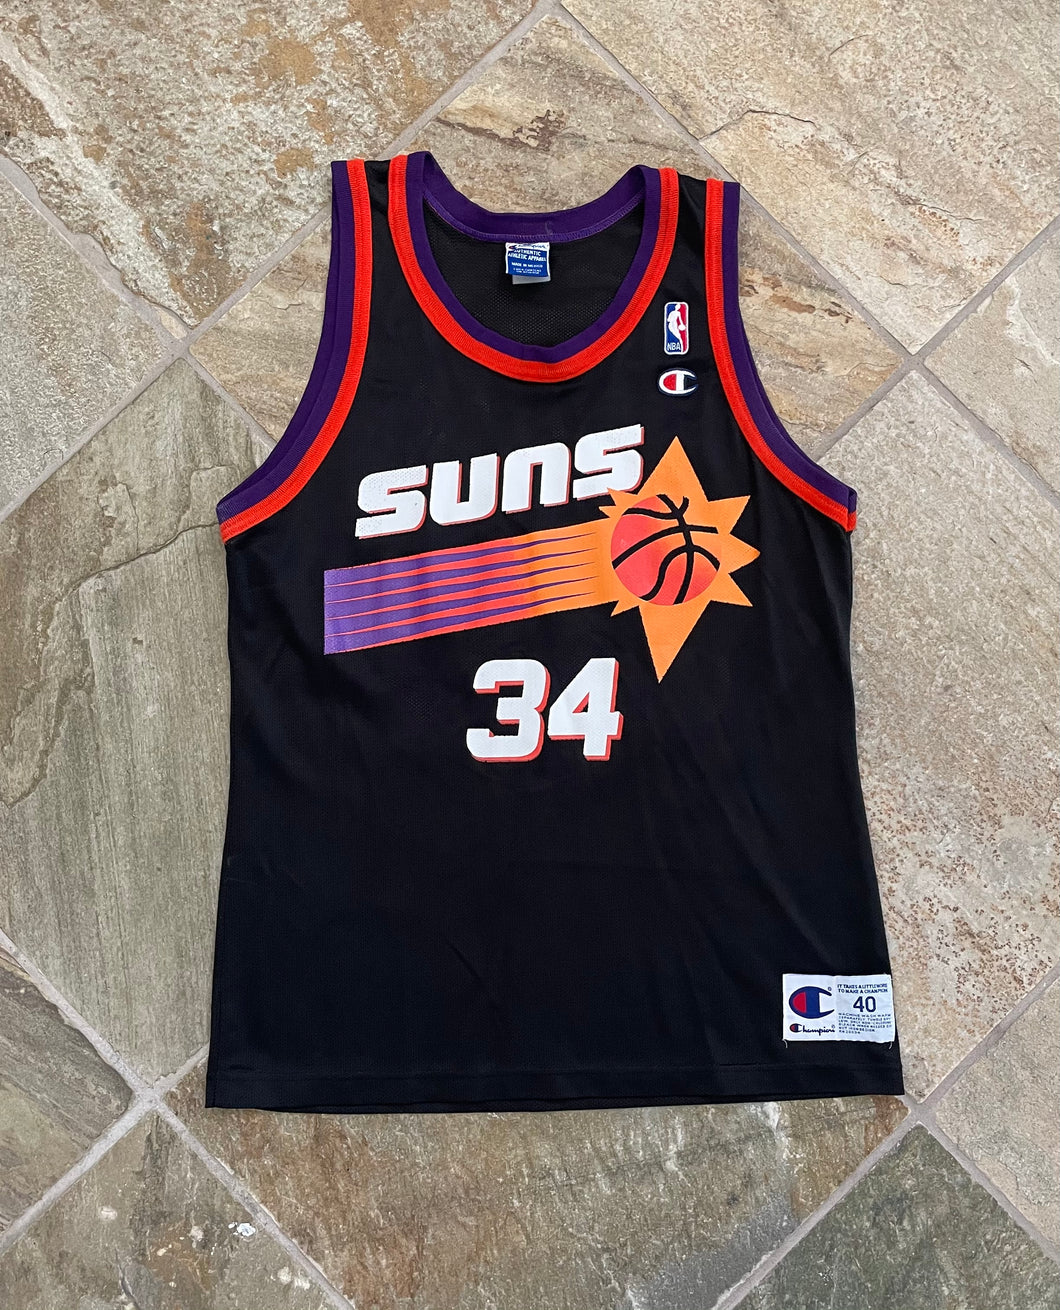 Vintage Phoenix Suns Antonio McDyess Champion Basketball Jersey, Size 40, Medium